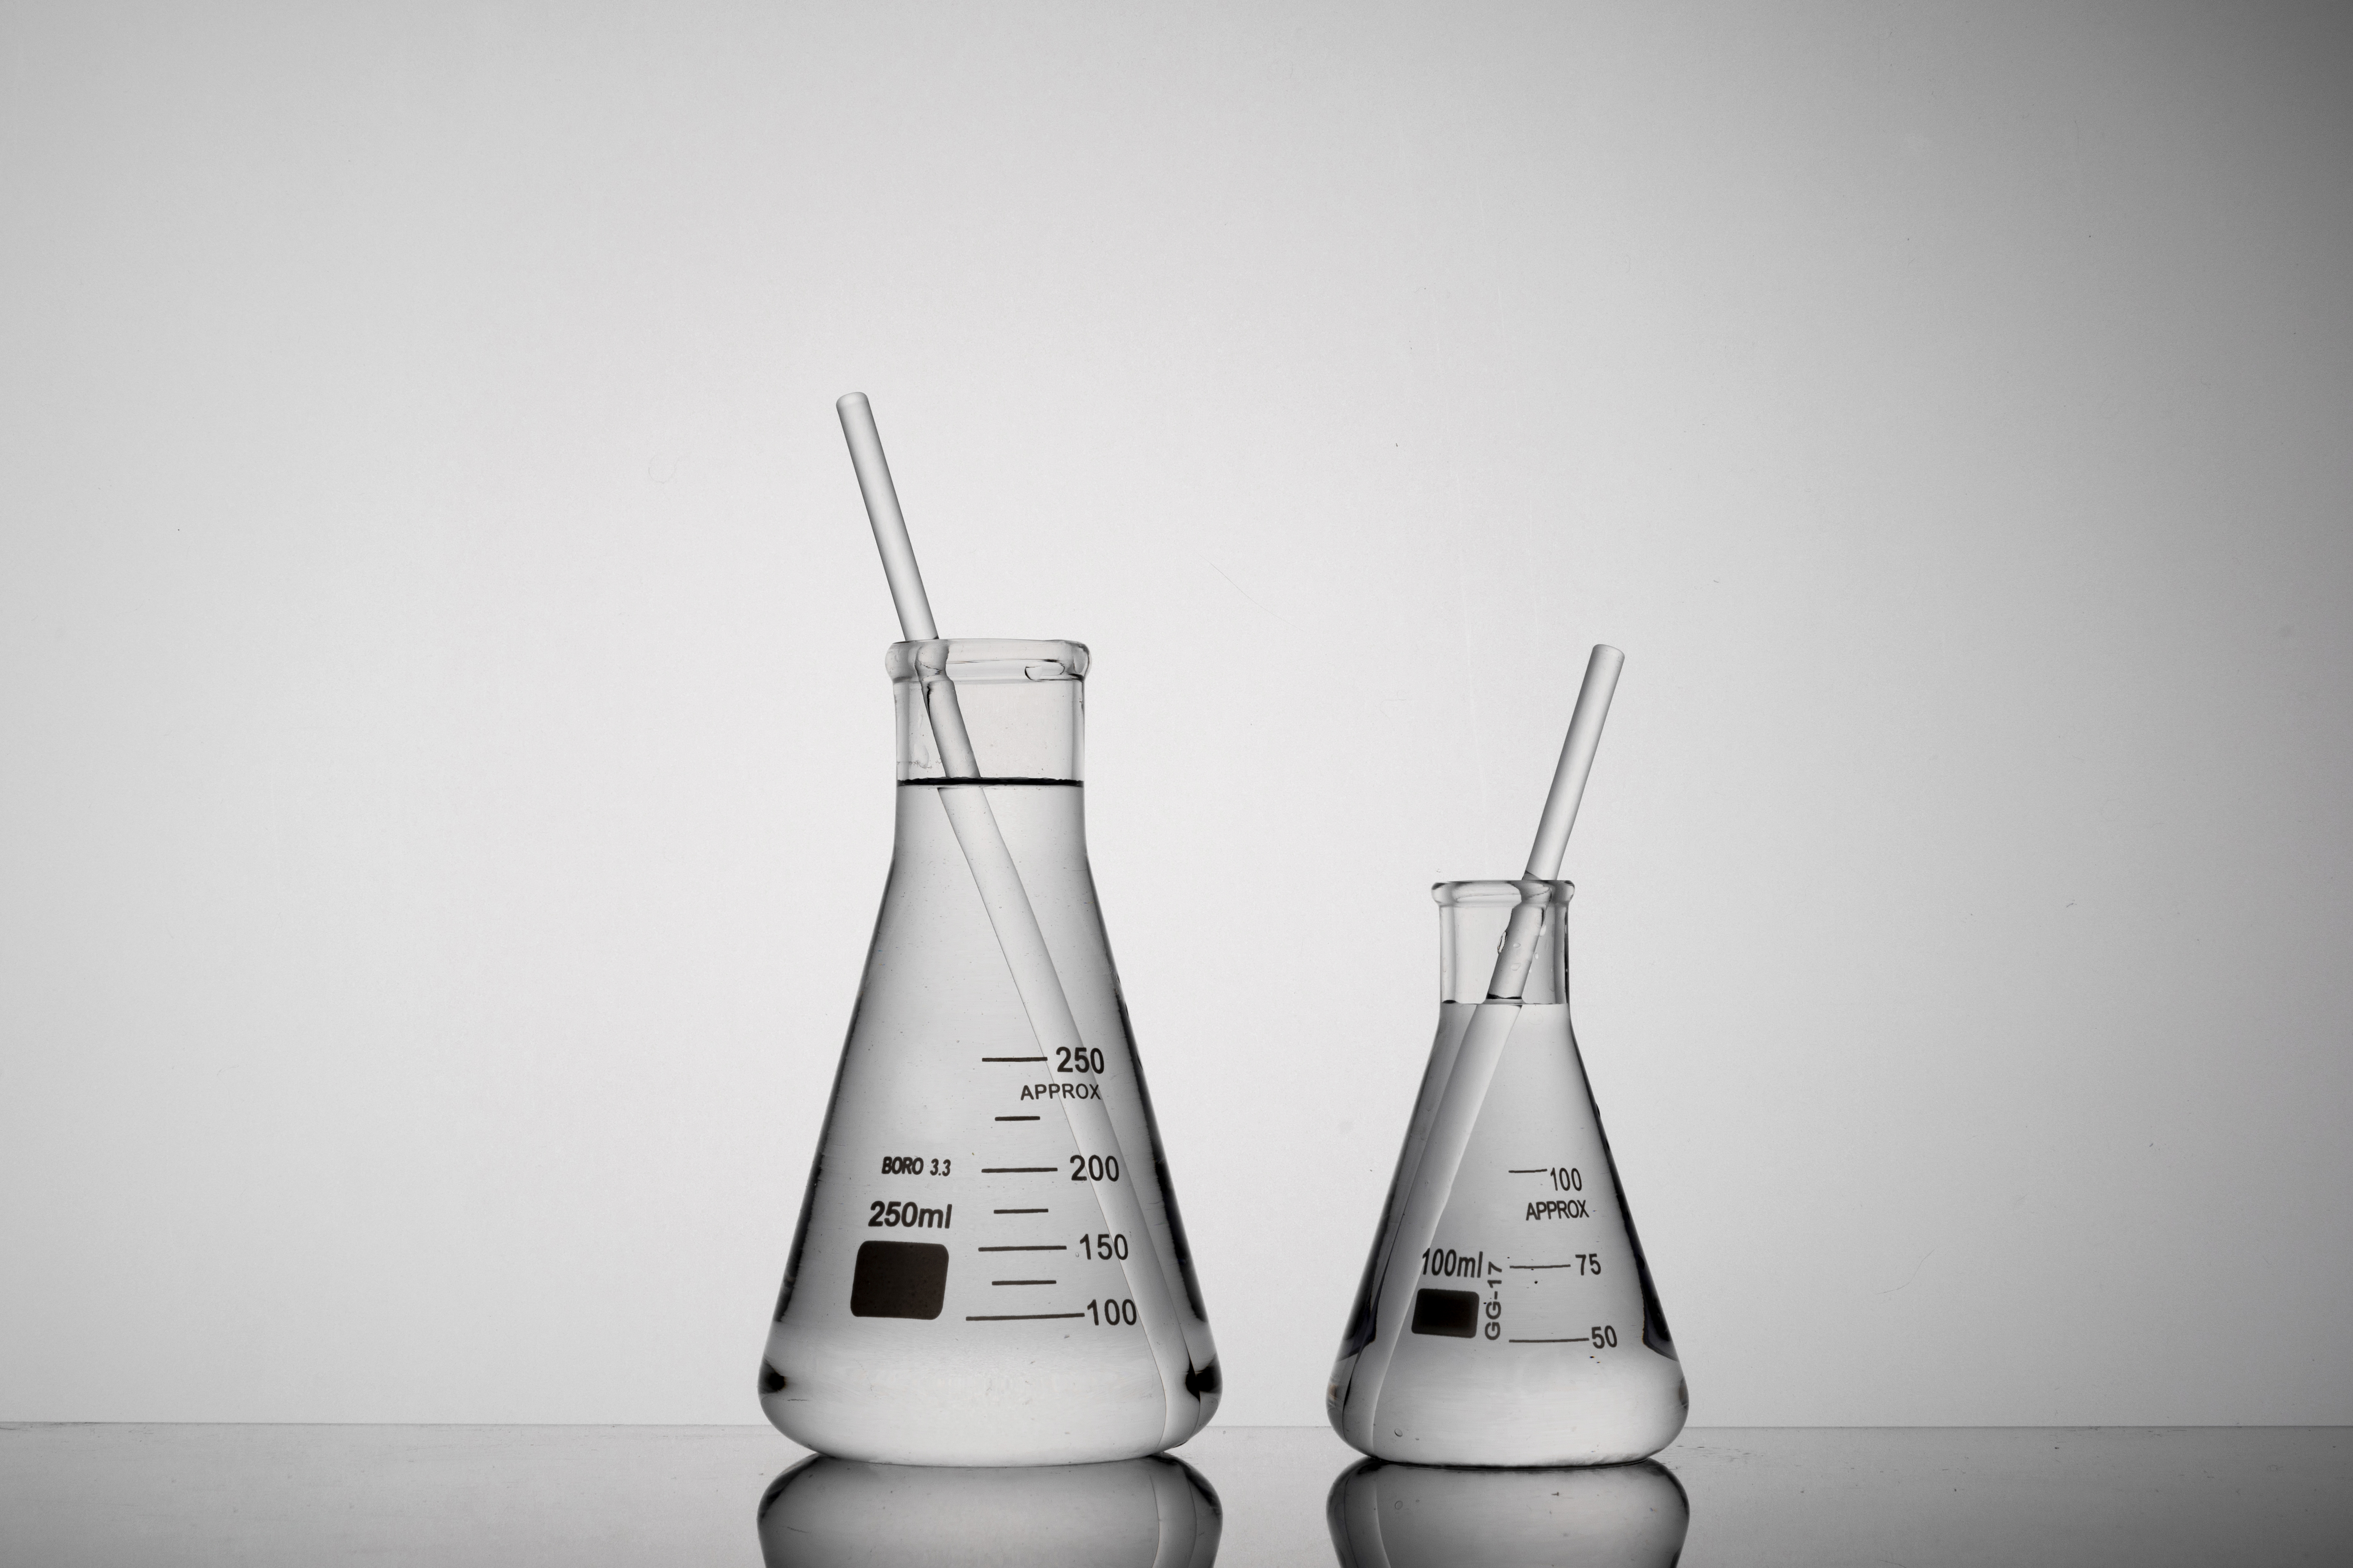 modi chemical - Best 5-Nitrosalicylic Acid Manufacturer Company